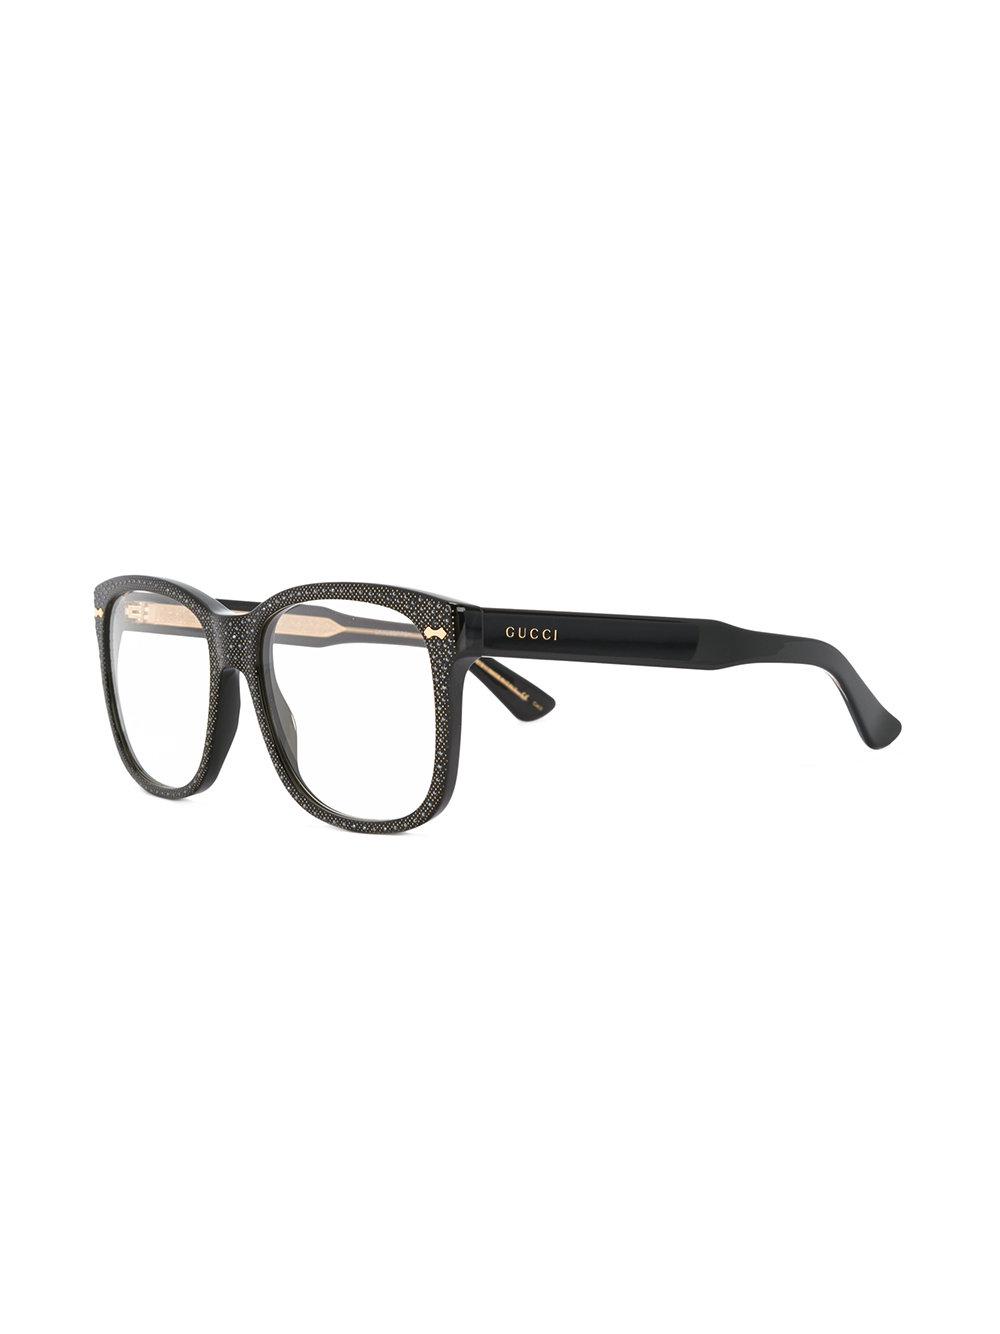 Gucci Square Frame Rhinestone Glasses in Black | Lyst